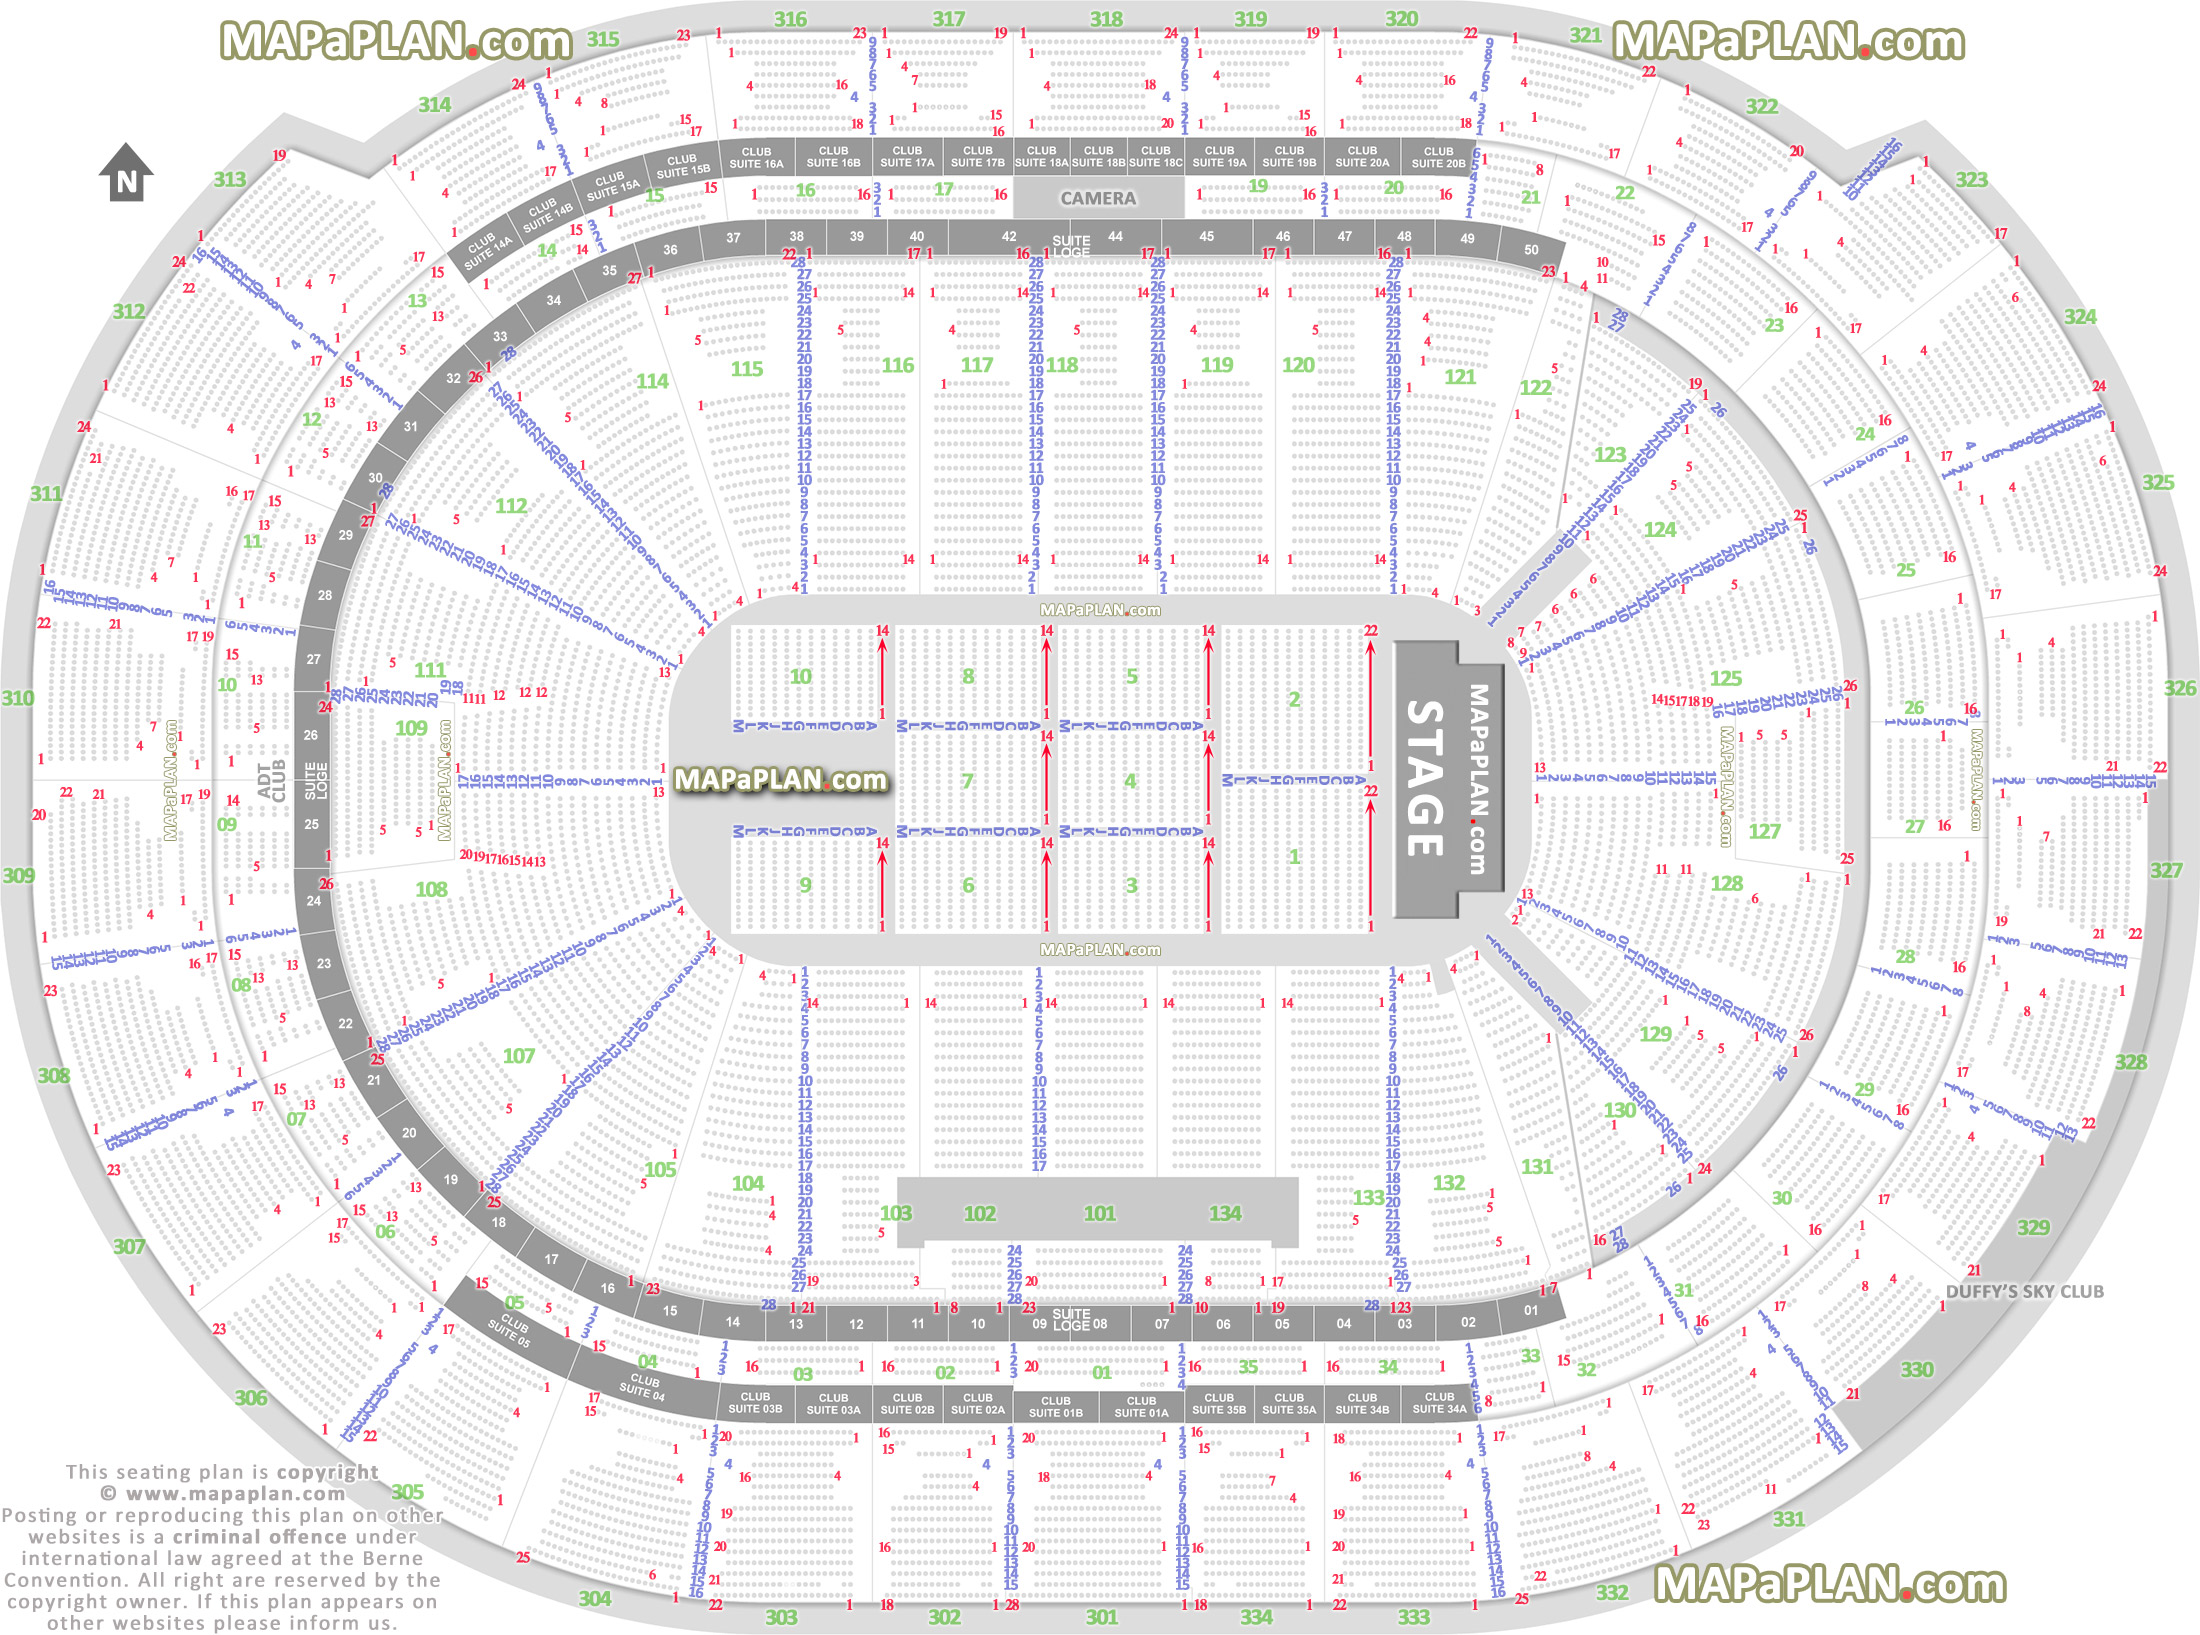 Scottrade Concert Seating Chart